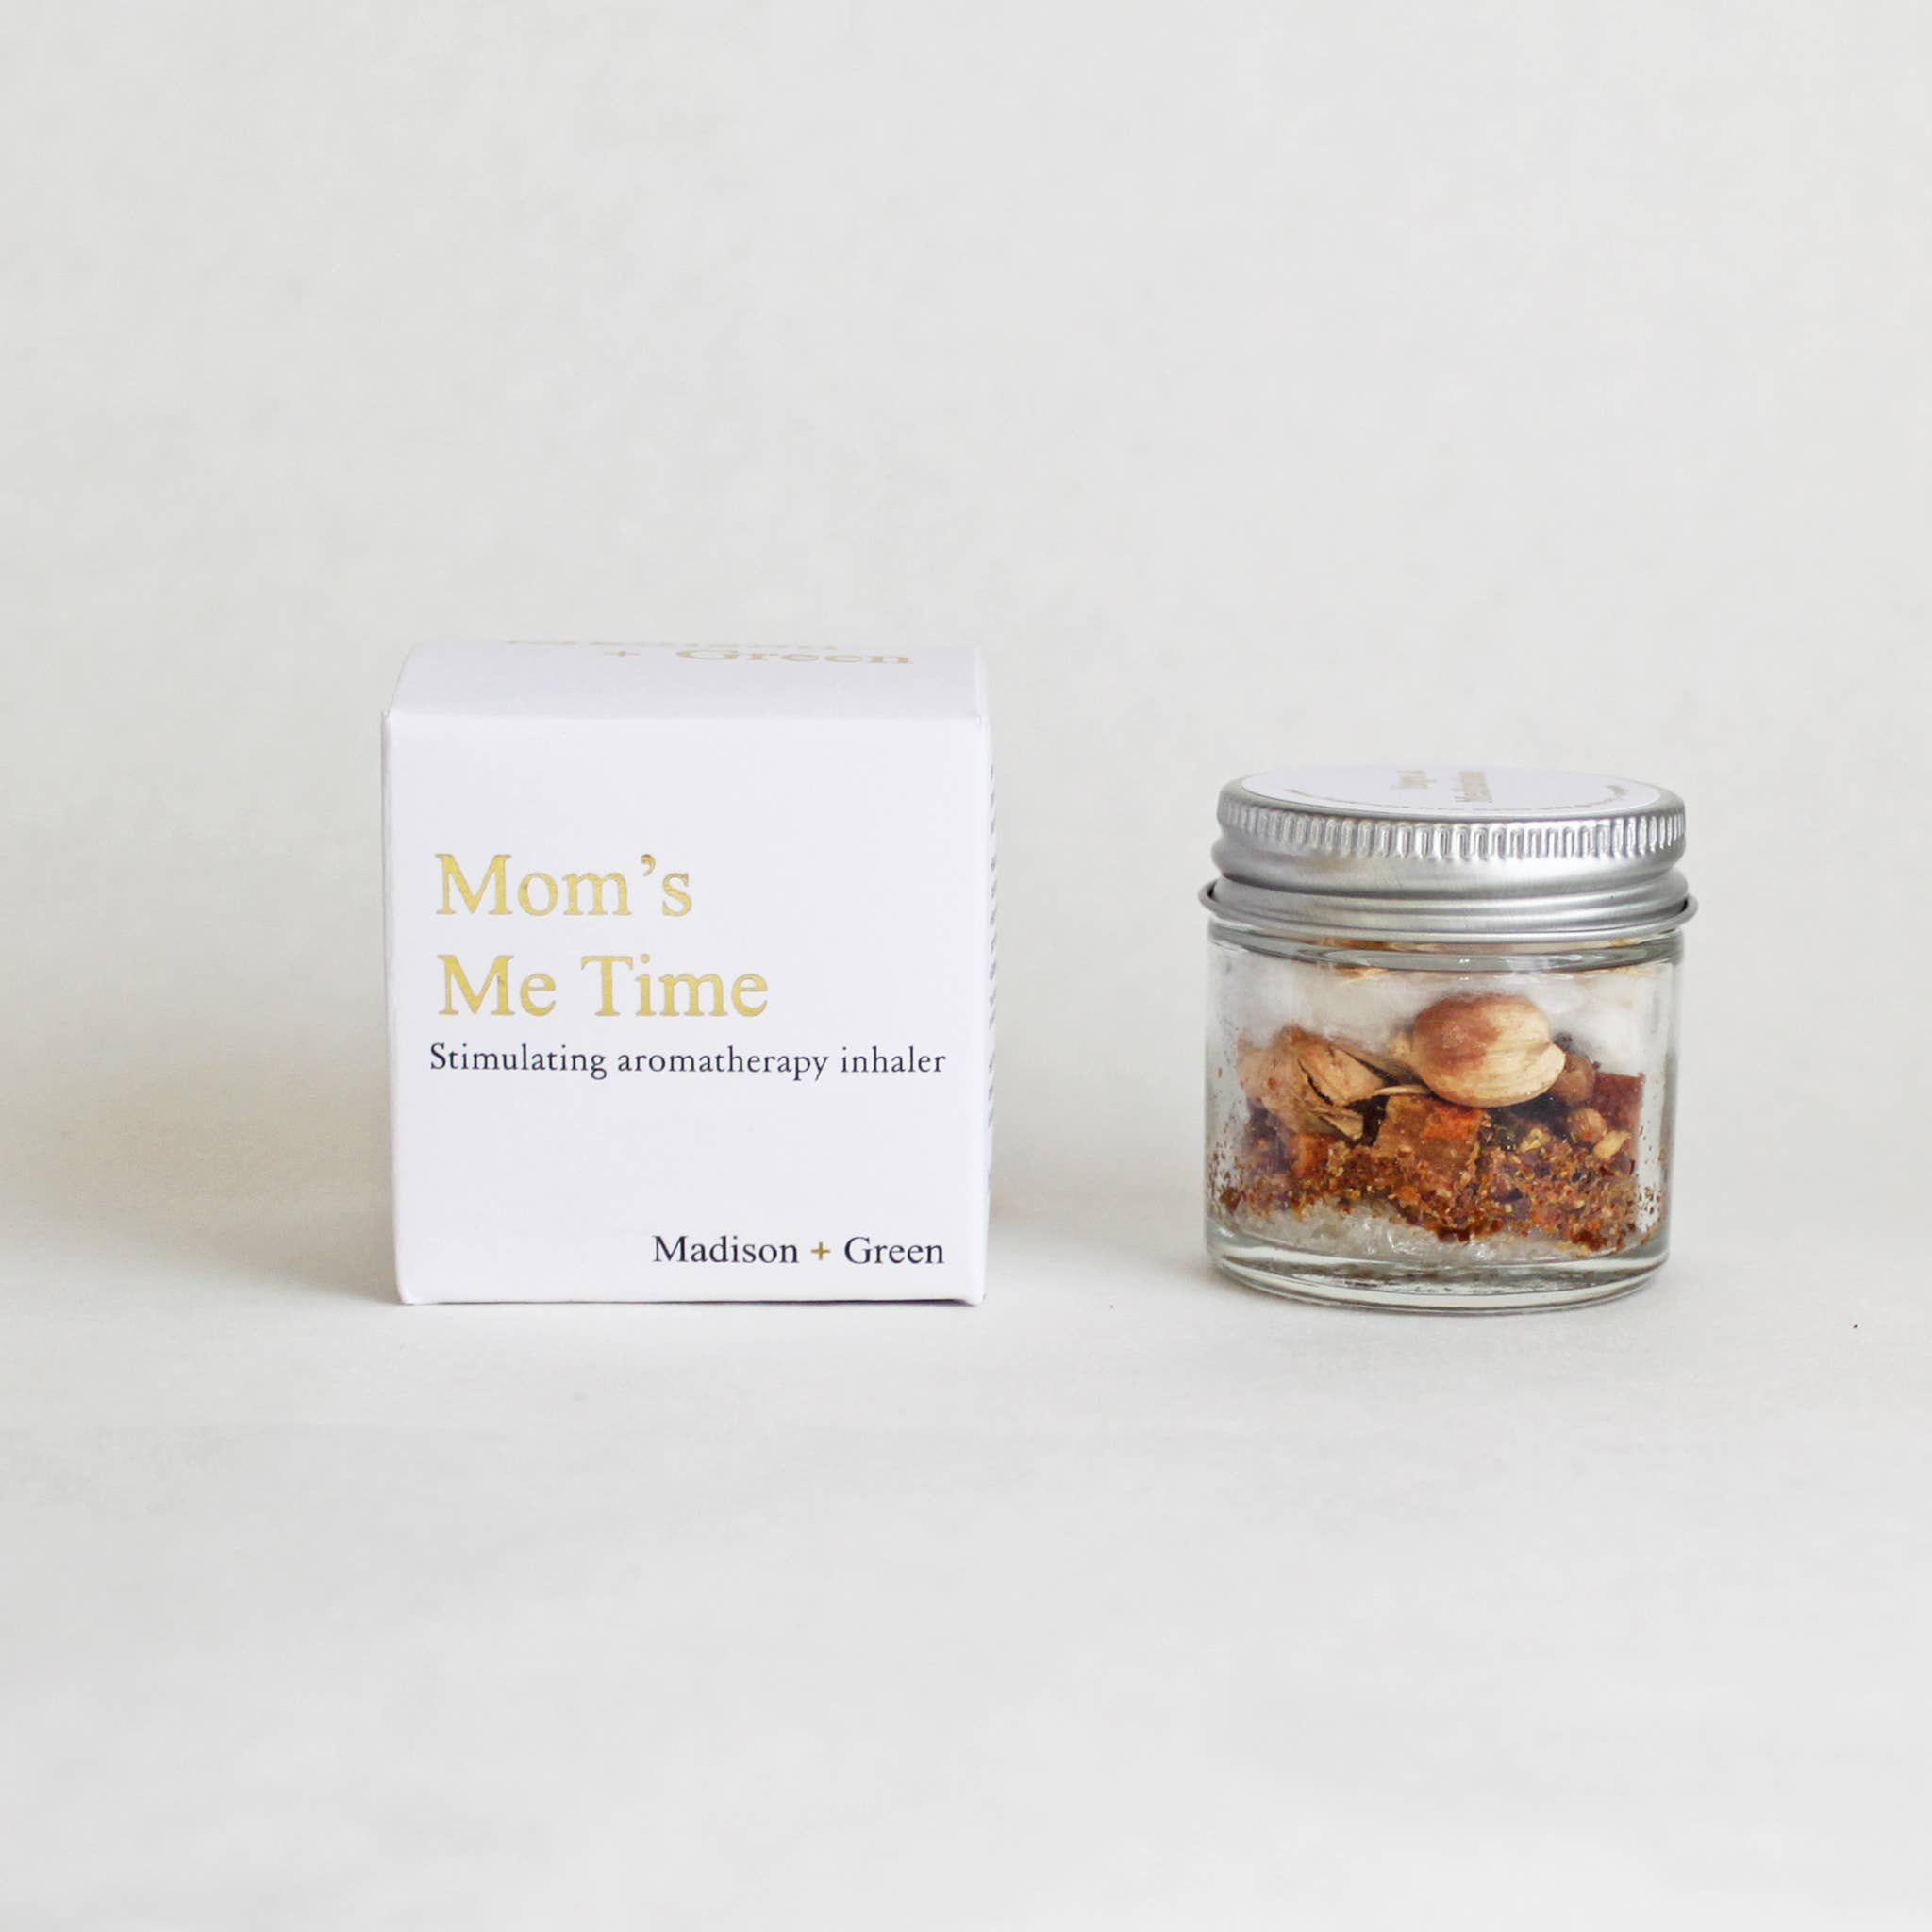 "Mom's Me Time" - Mom's Stress Relief Aromatherapy Inhaler